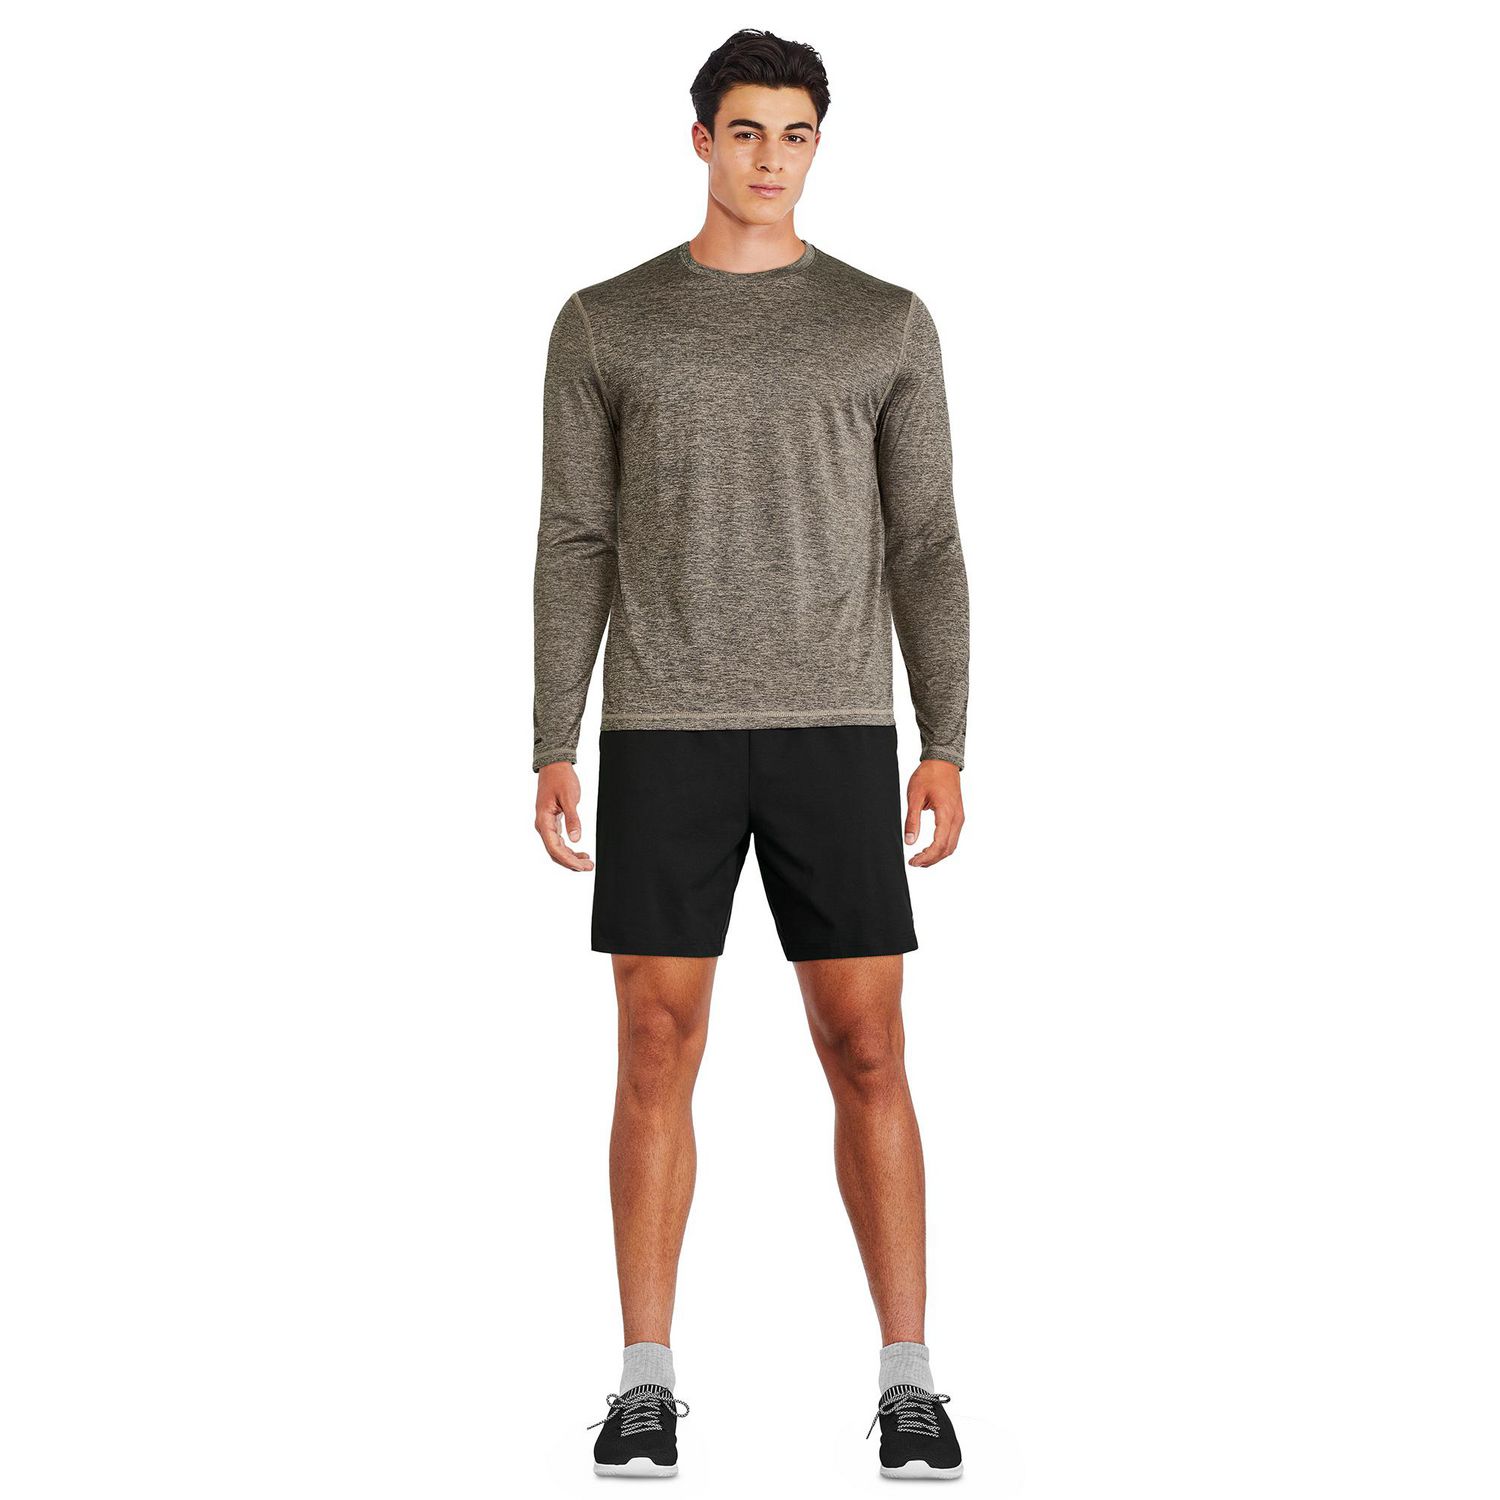 $11.29 - Fashion Men S Slim Muscle Fit Gym Long Sleeve T Shirt Outwork  Sport Wear # #Fashion